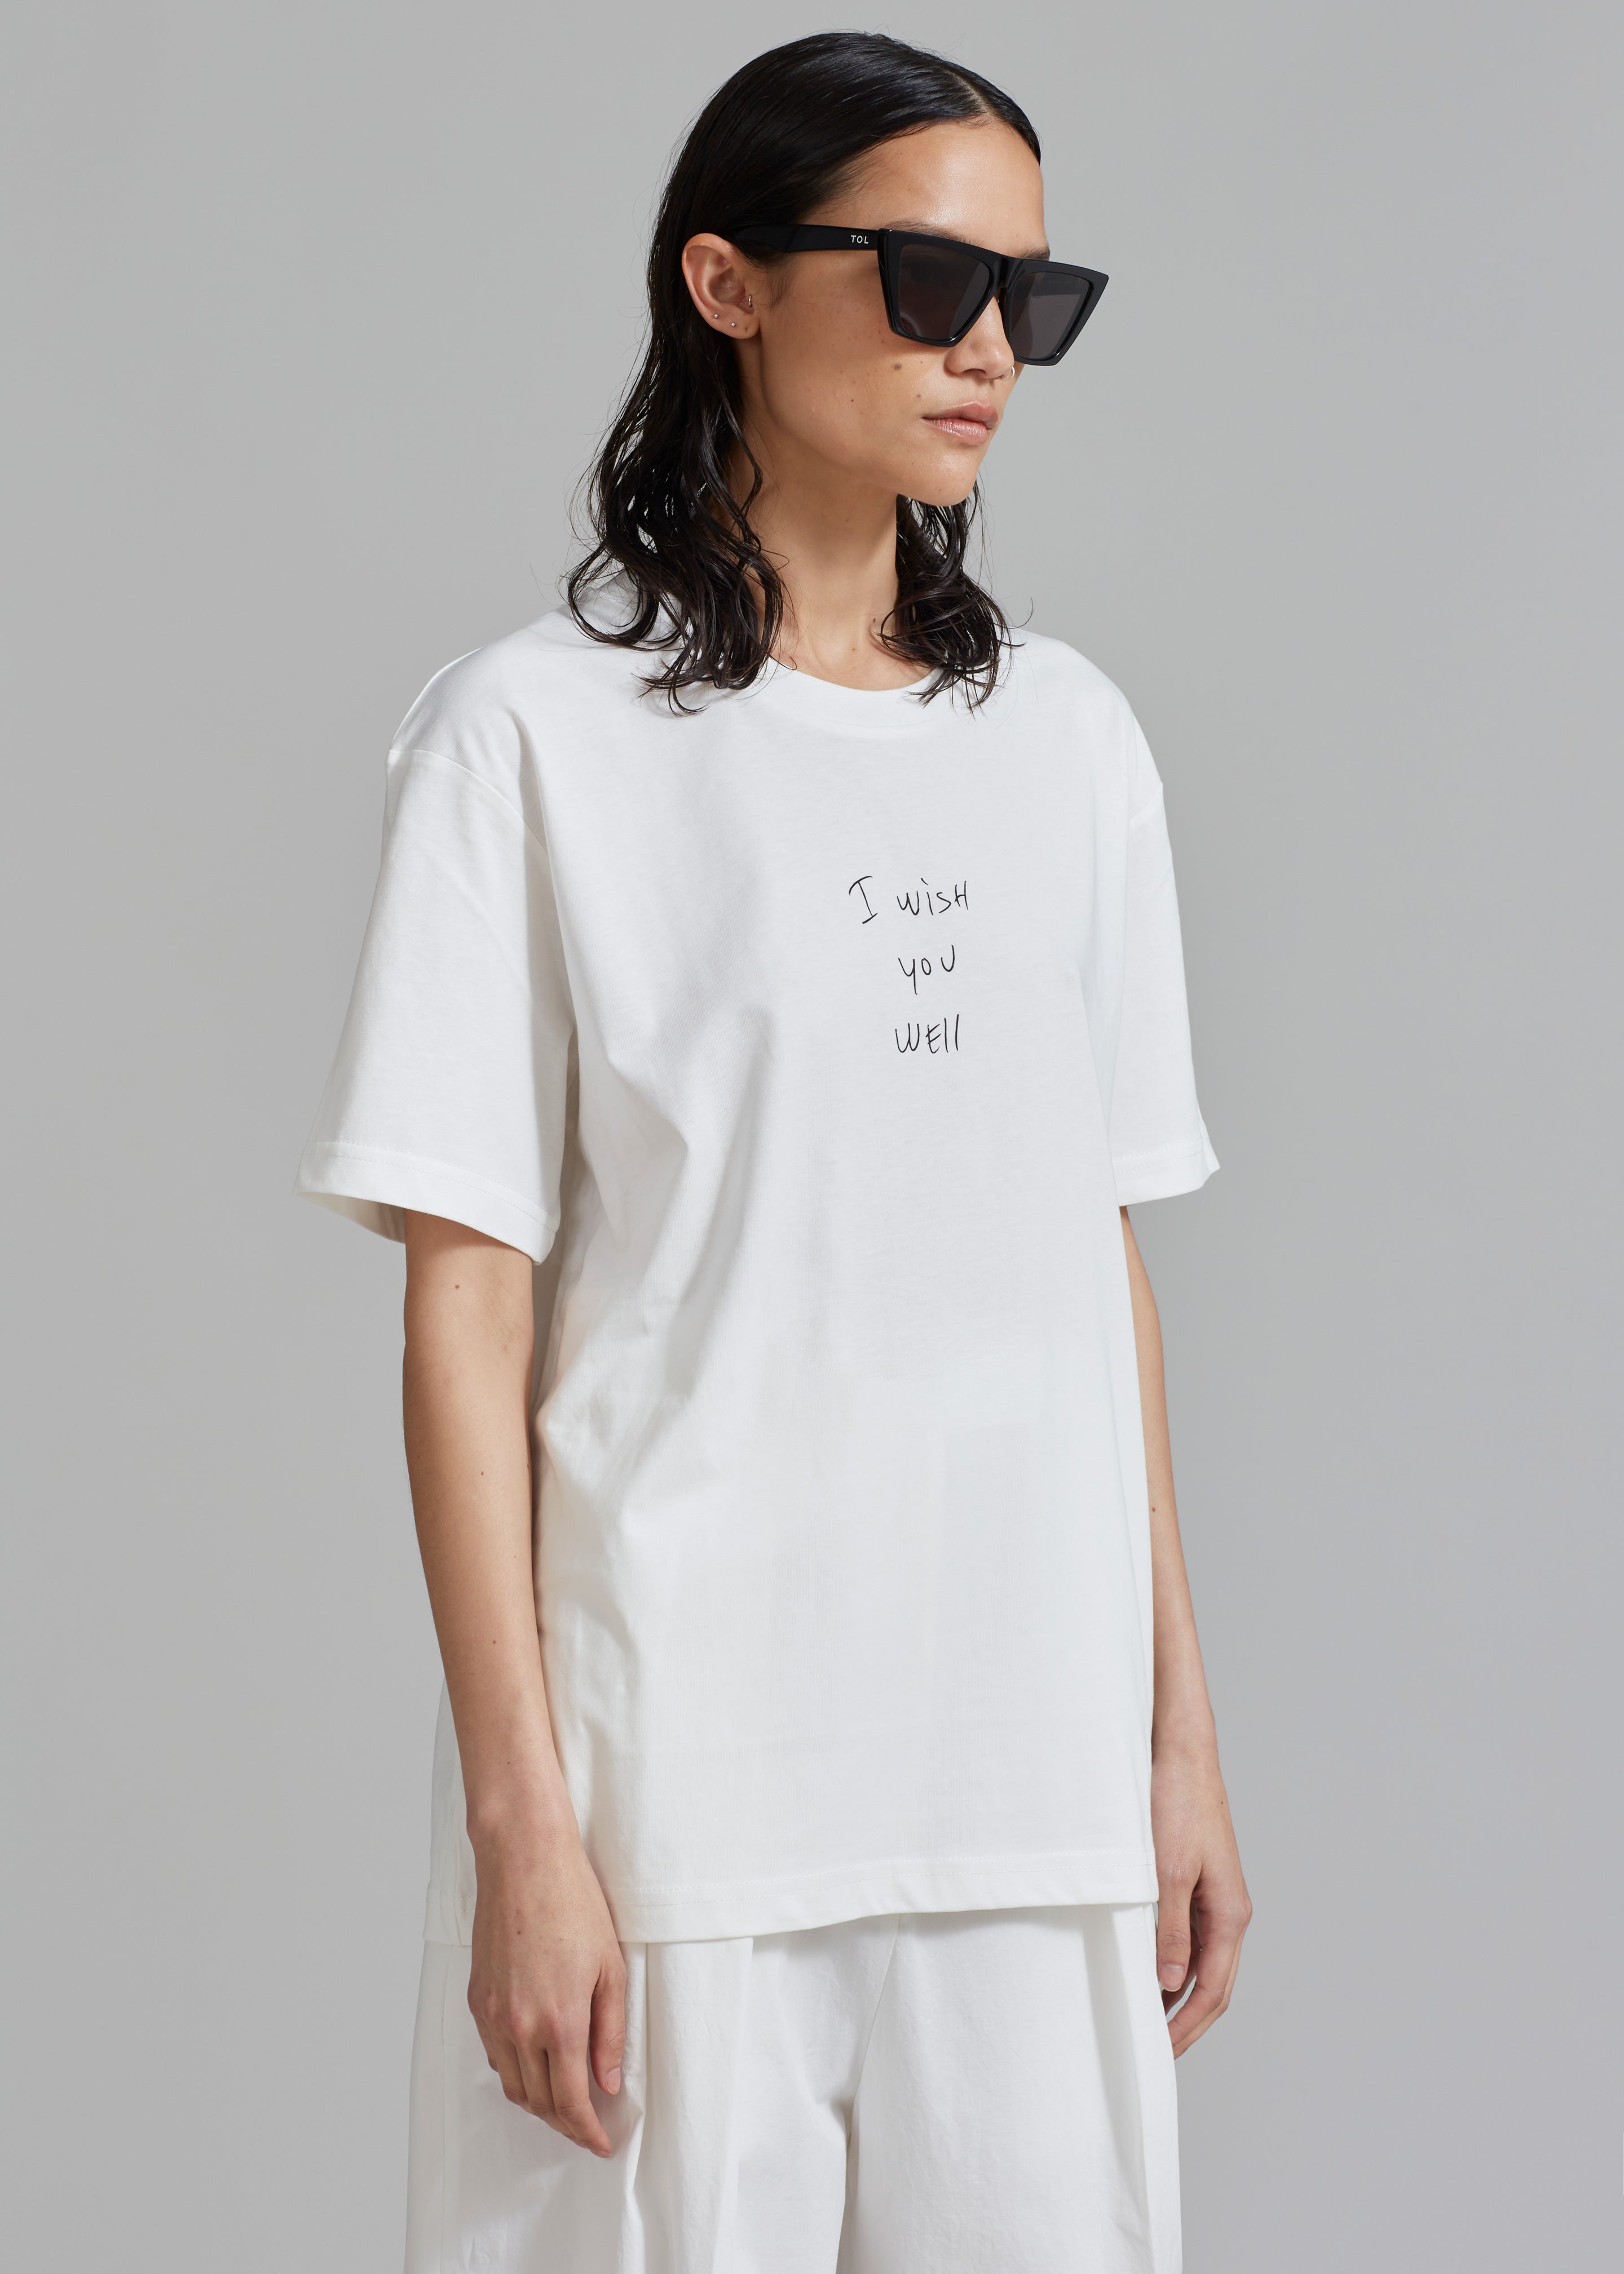 The Frankie Shop x Thomas Lélu Slope T-Shirt - Off White/Black - 8